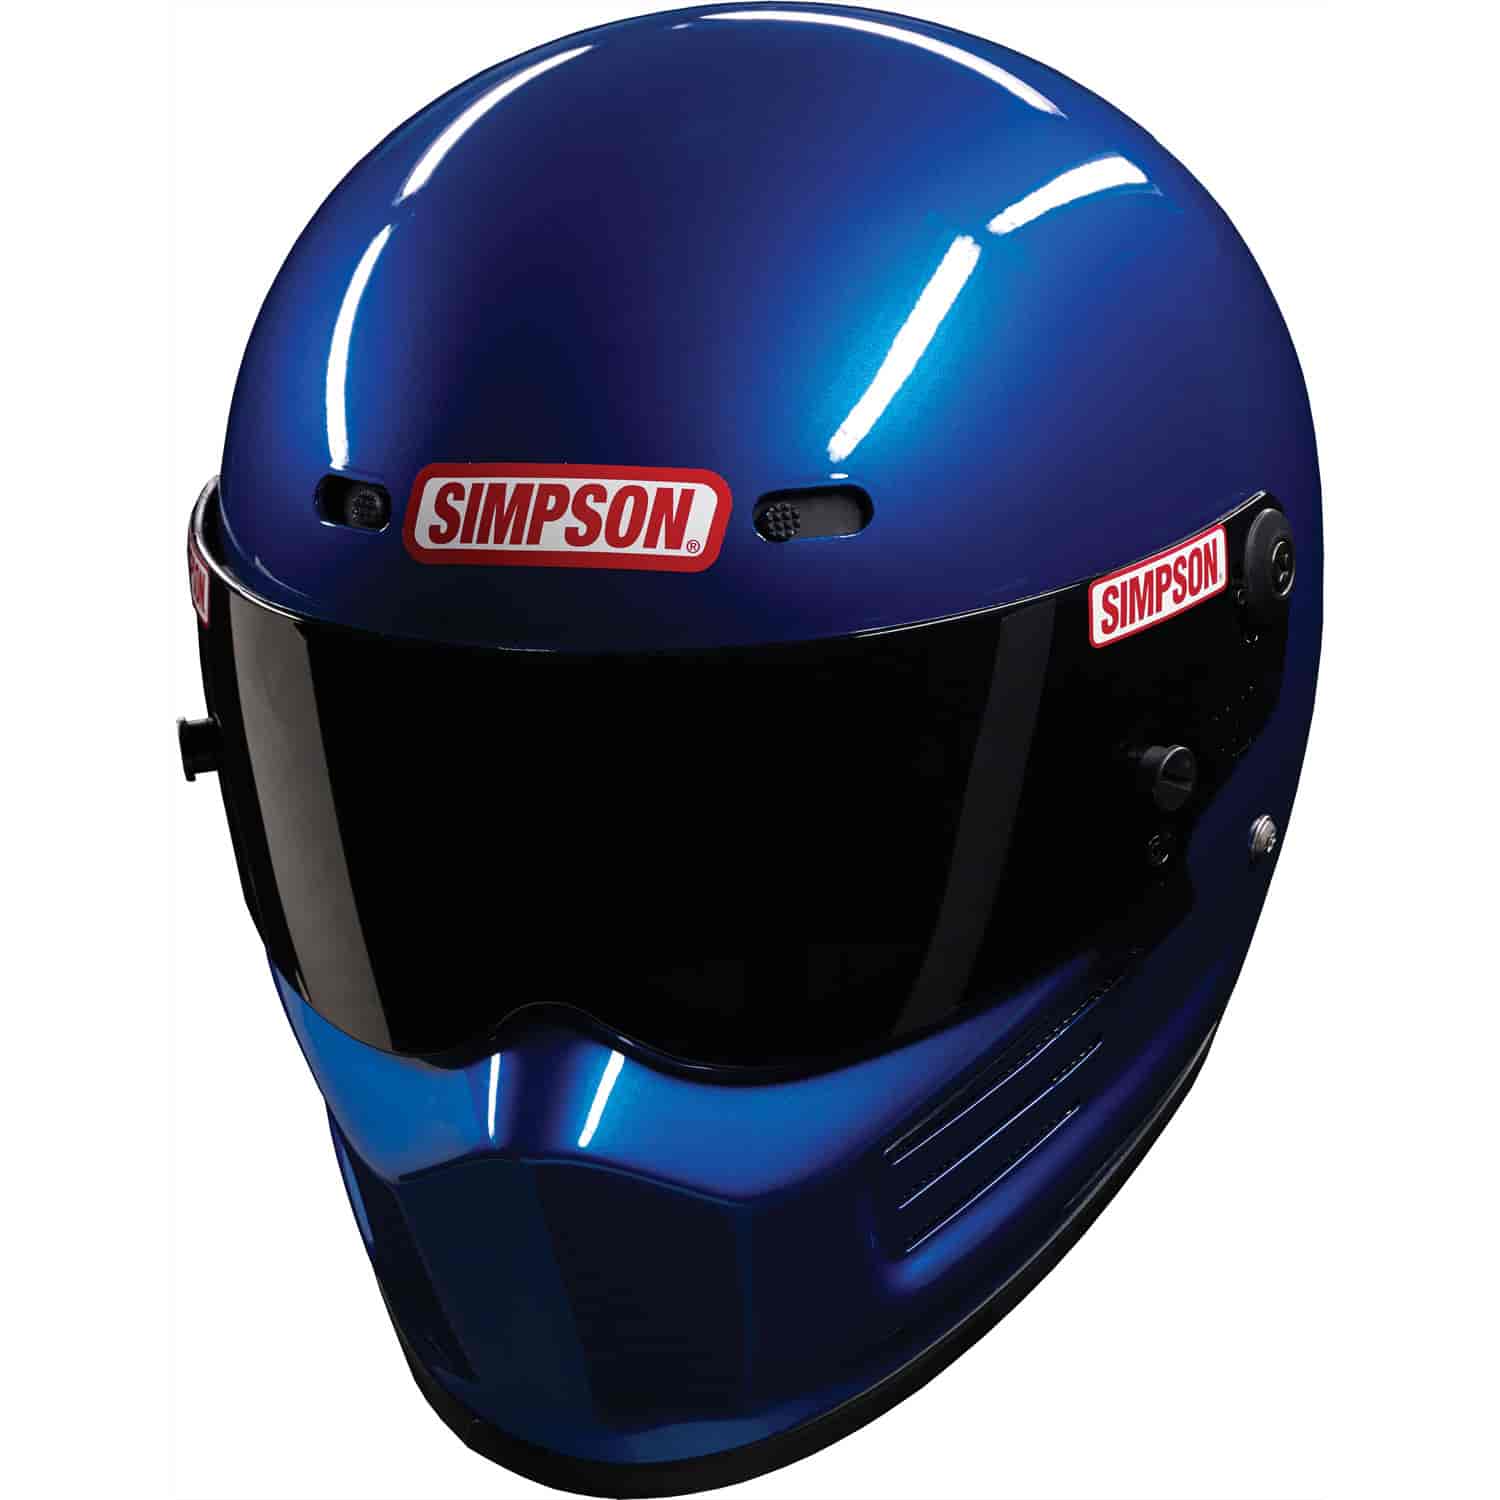 Super Bandit Helmet SA2015 Certified